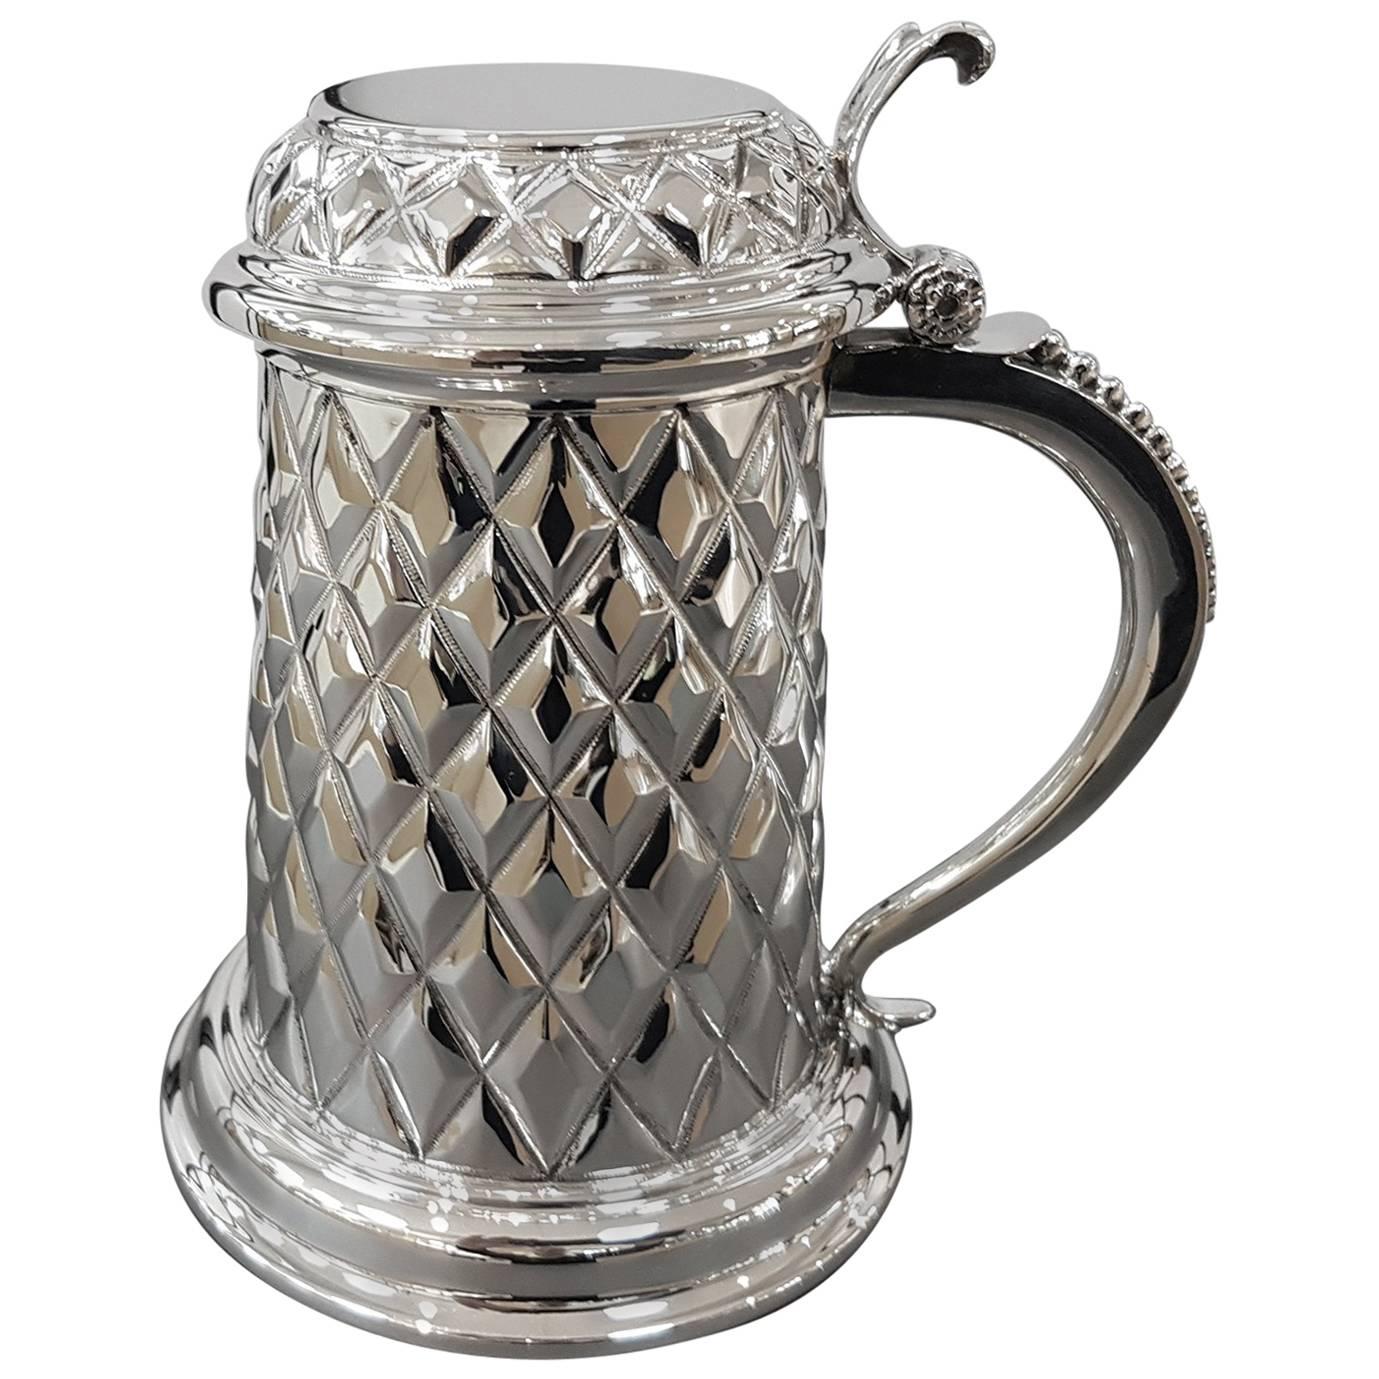 20th Century Italian Silver Tarkard, worked as Italian artisan tradition For Sale